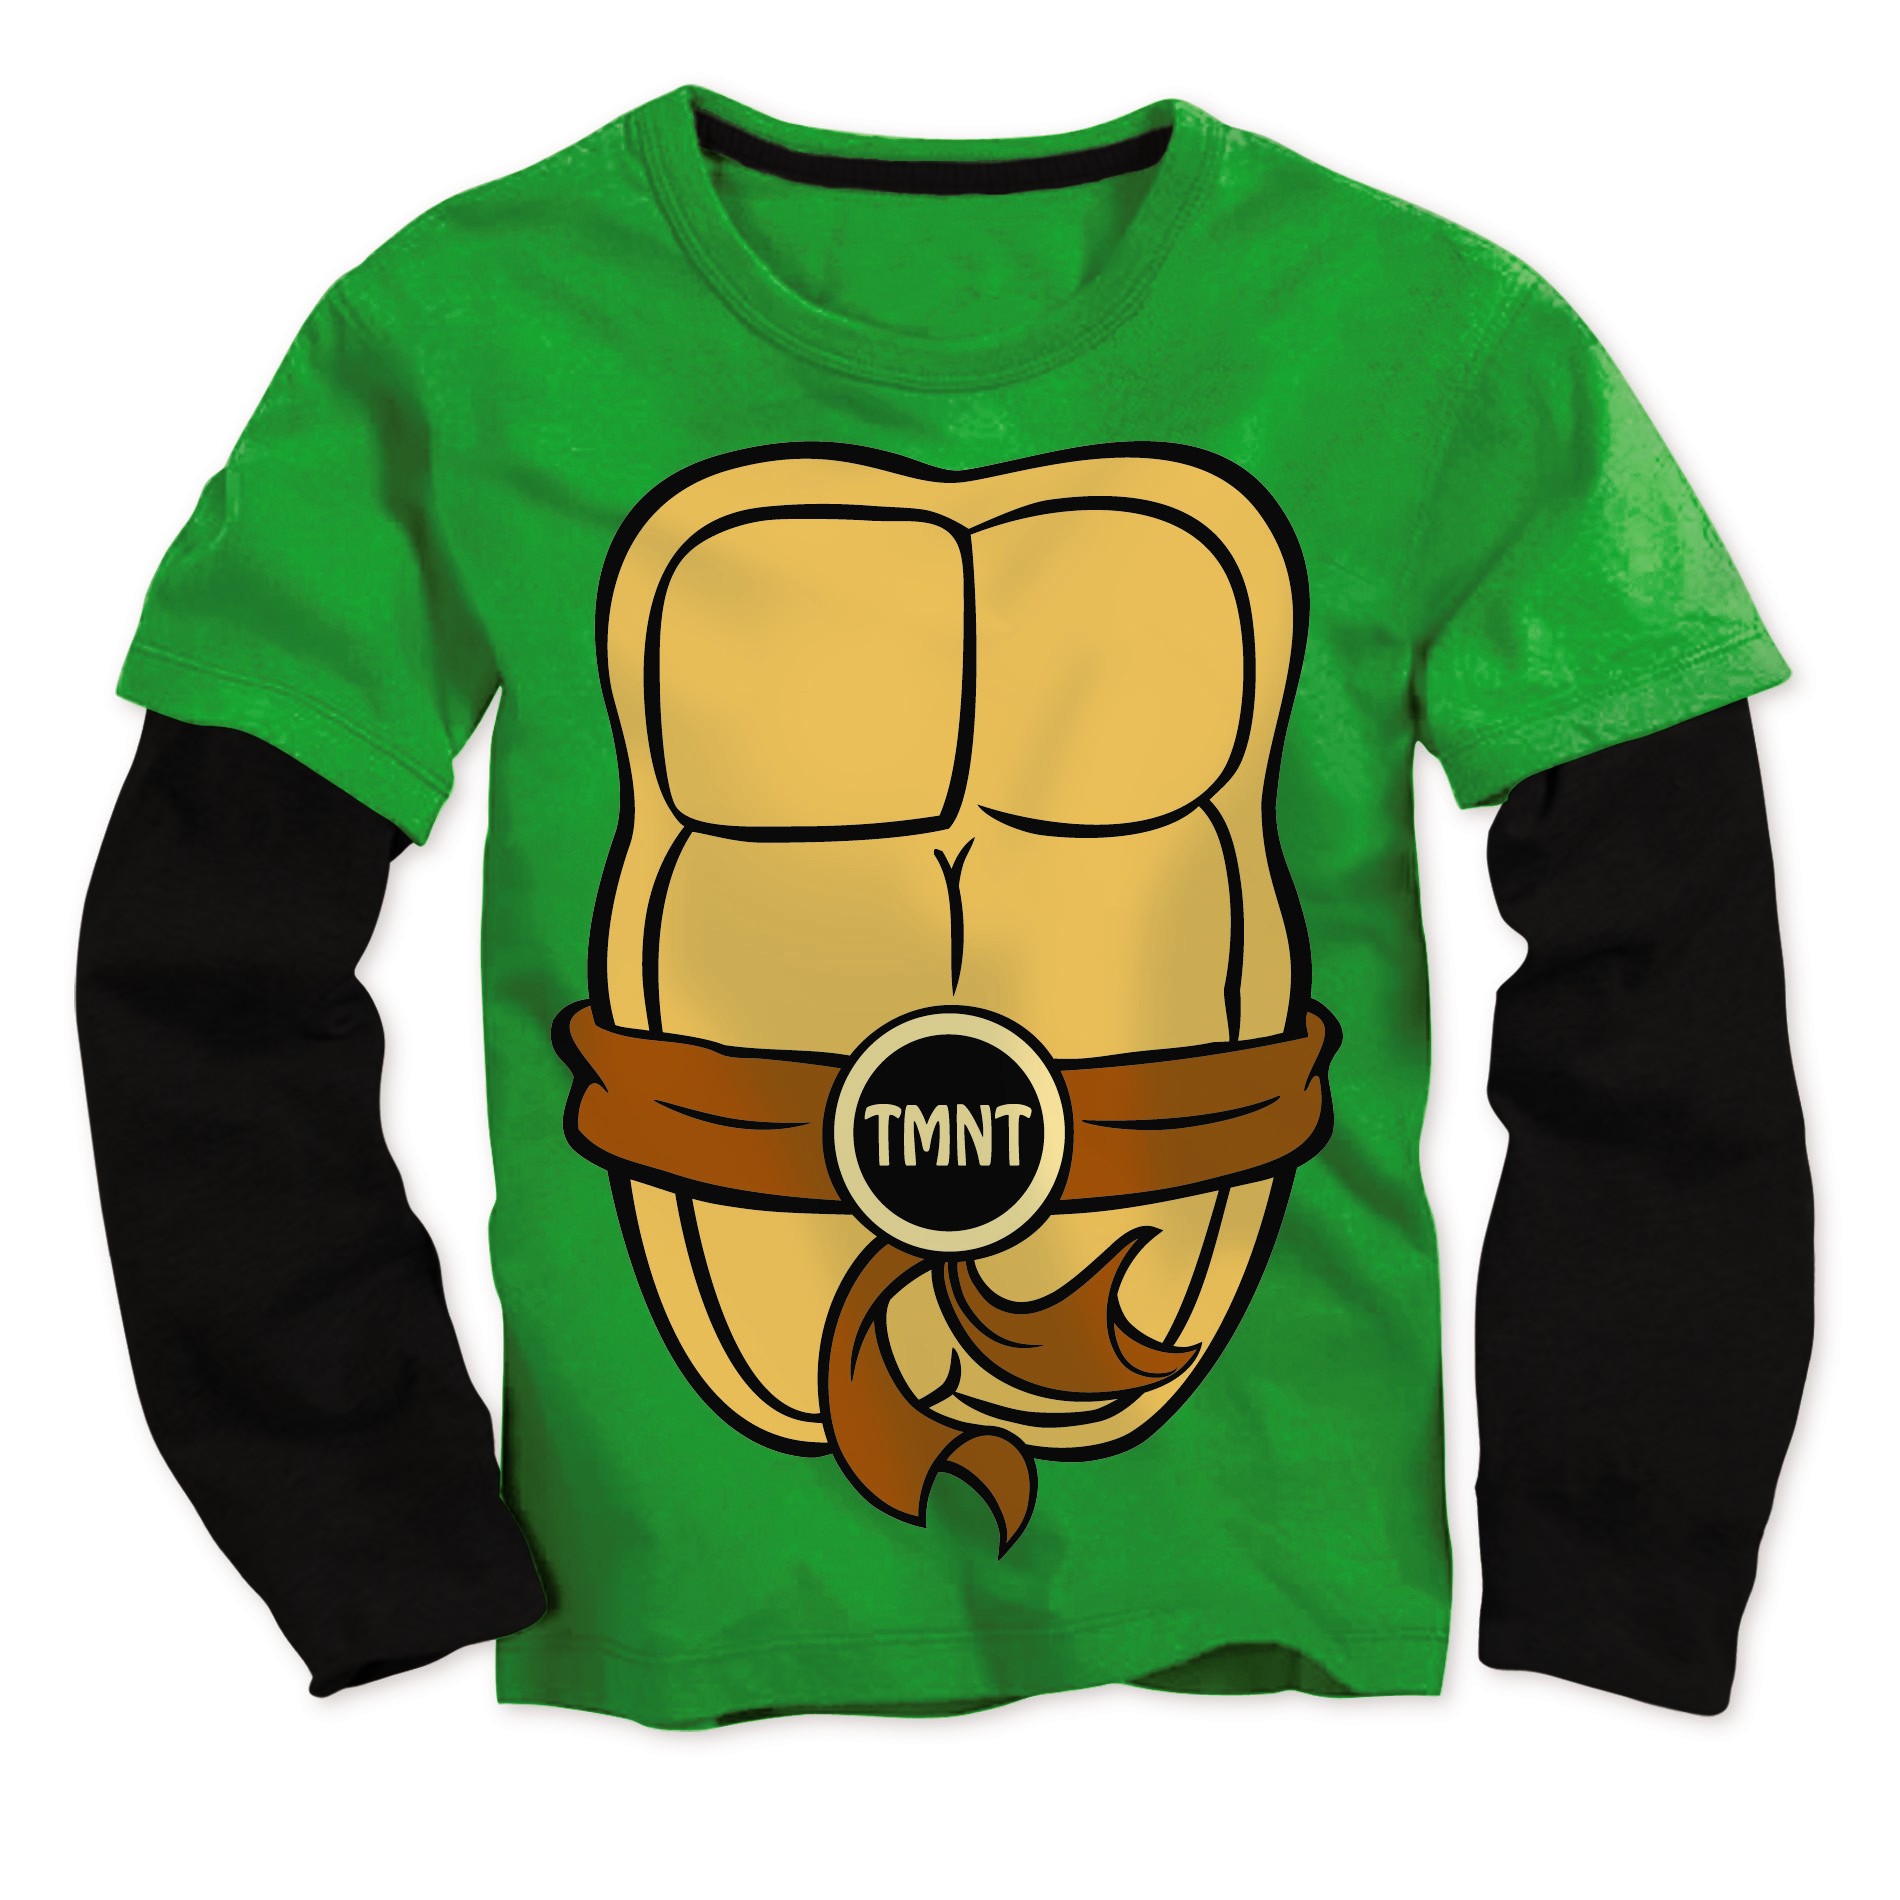 Nickelodeon Teenage Mutant Ninja Turtles Toddler Boy's Graphic T-Shirt